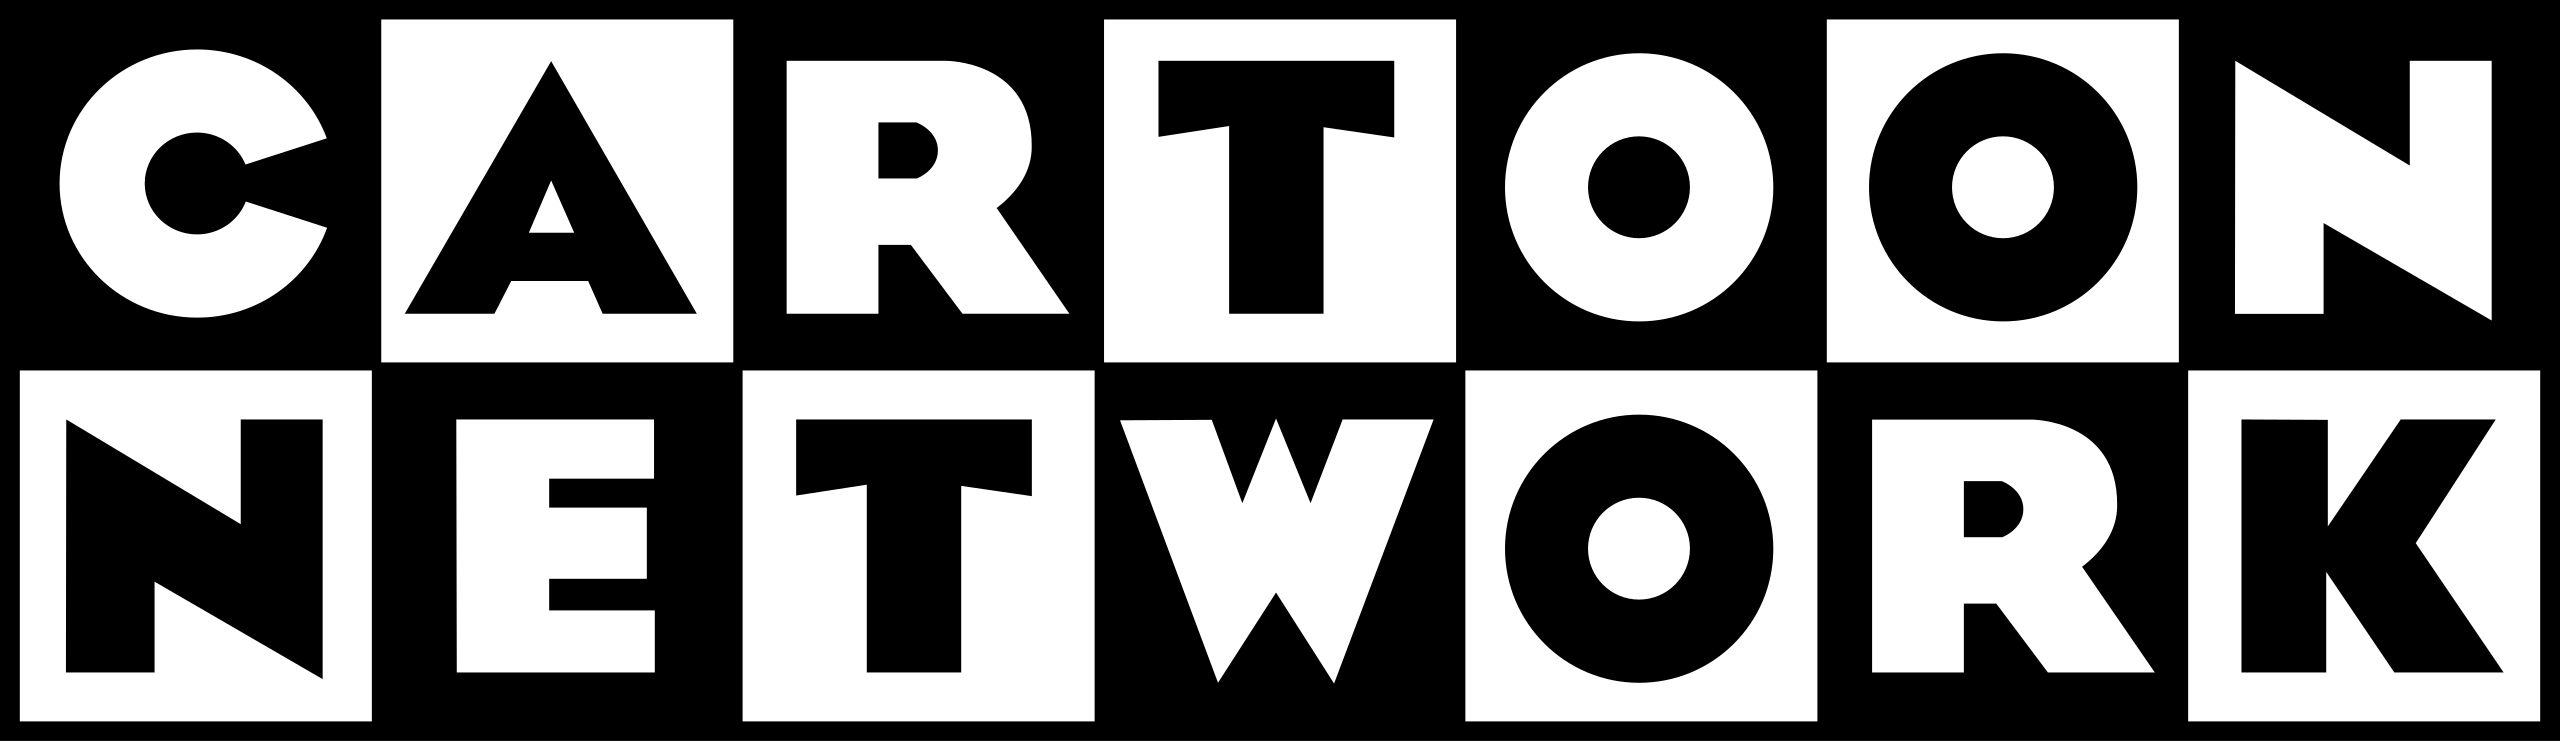 File:Cartoon Network logo (1992-2010).svg - Wikimedia Commons